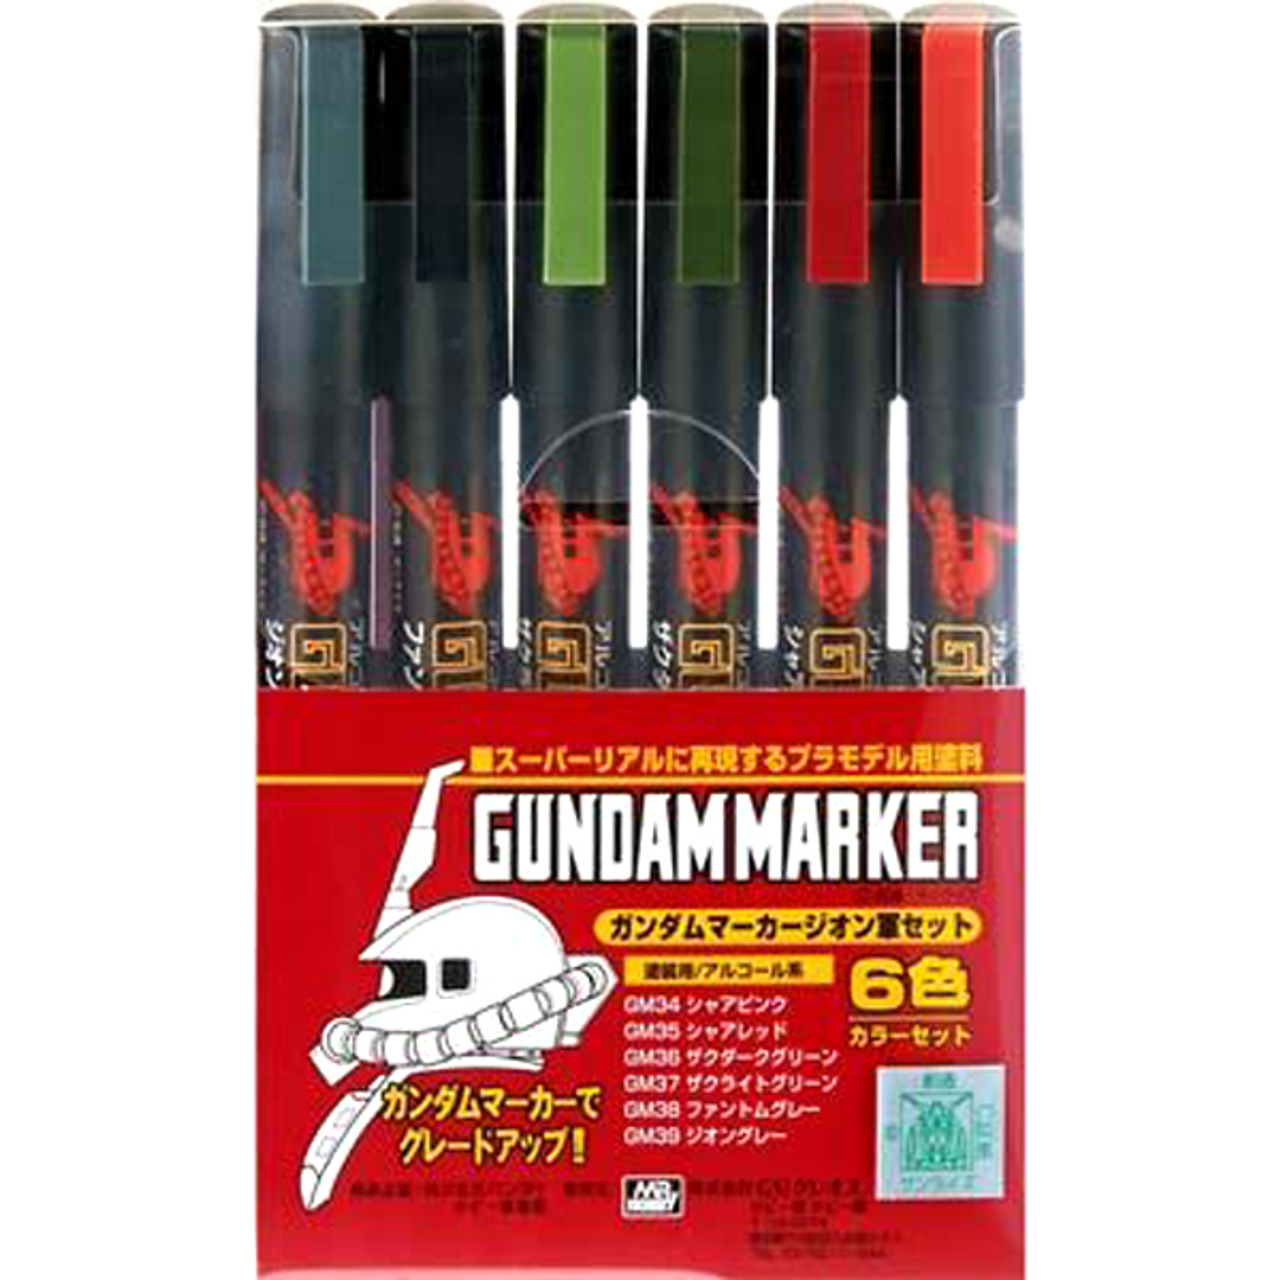 Gundam Marker Set - ZEON Marker